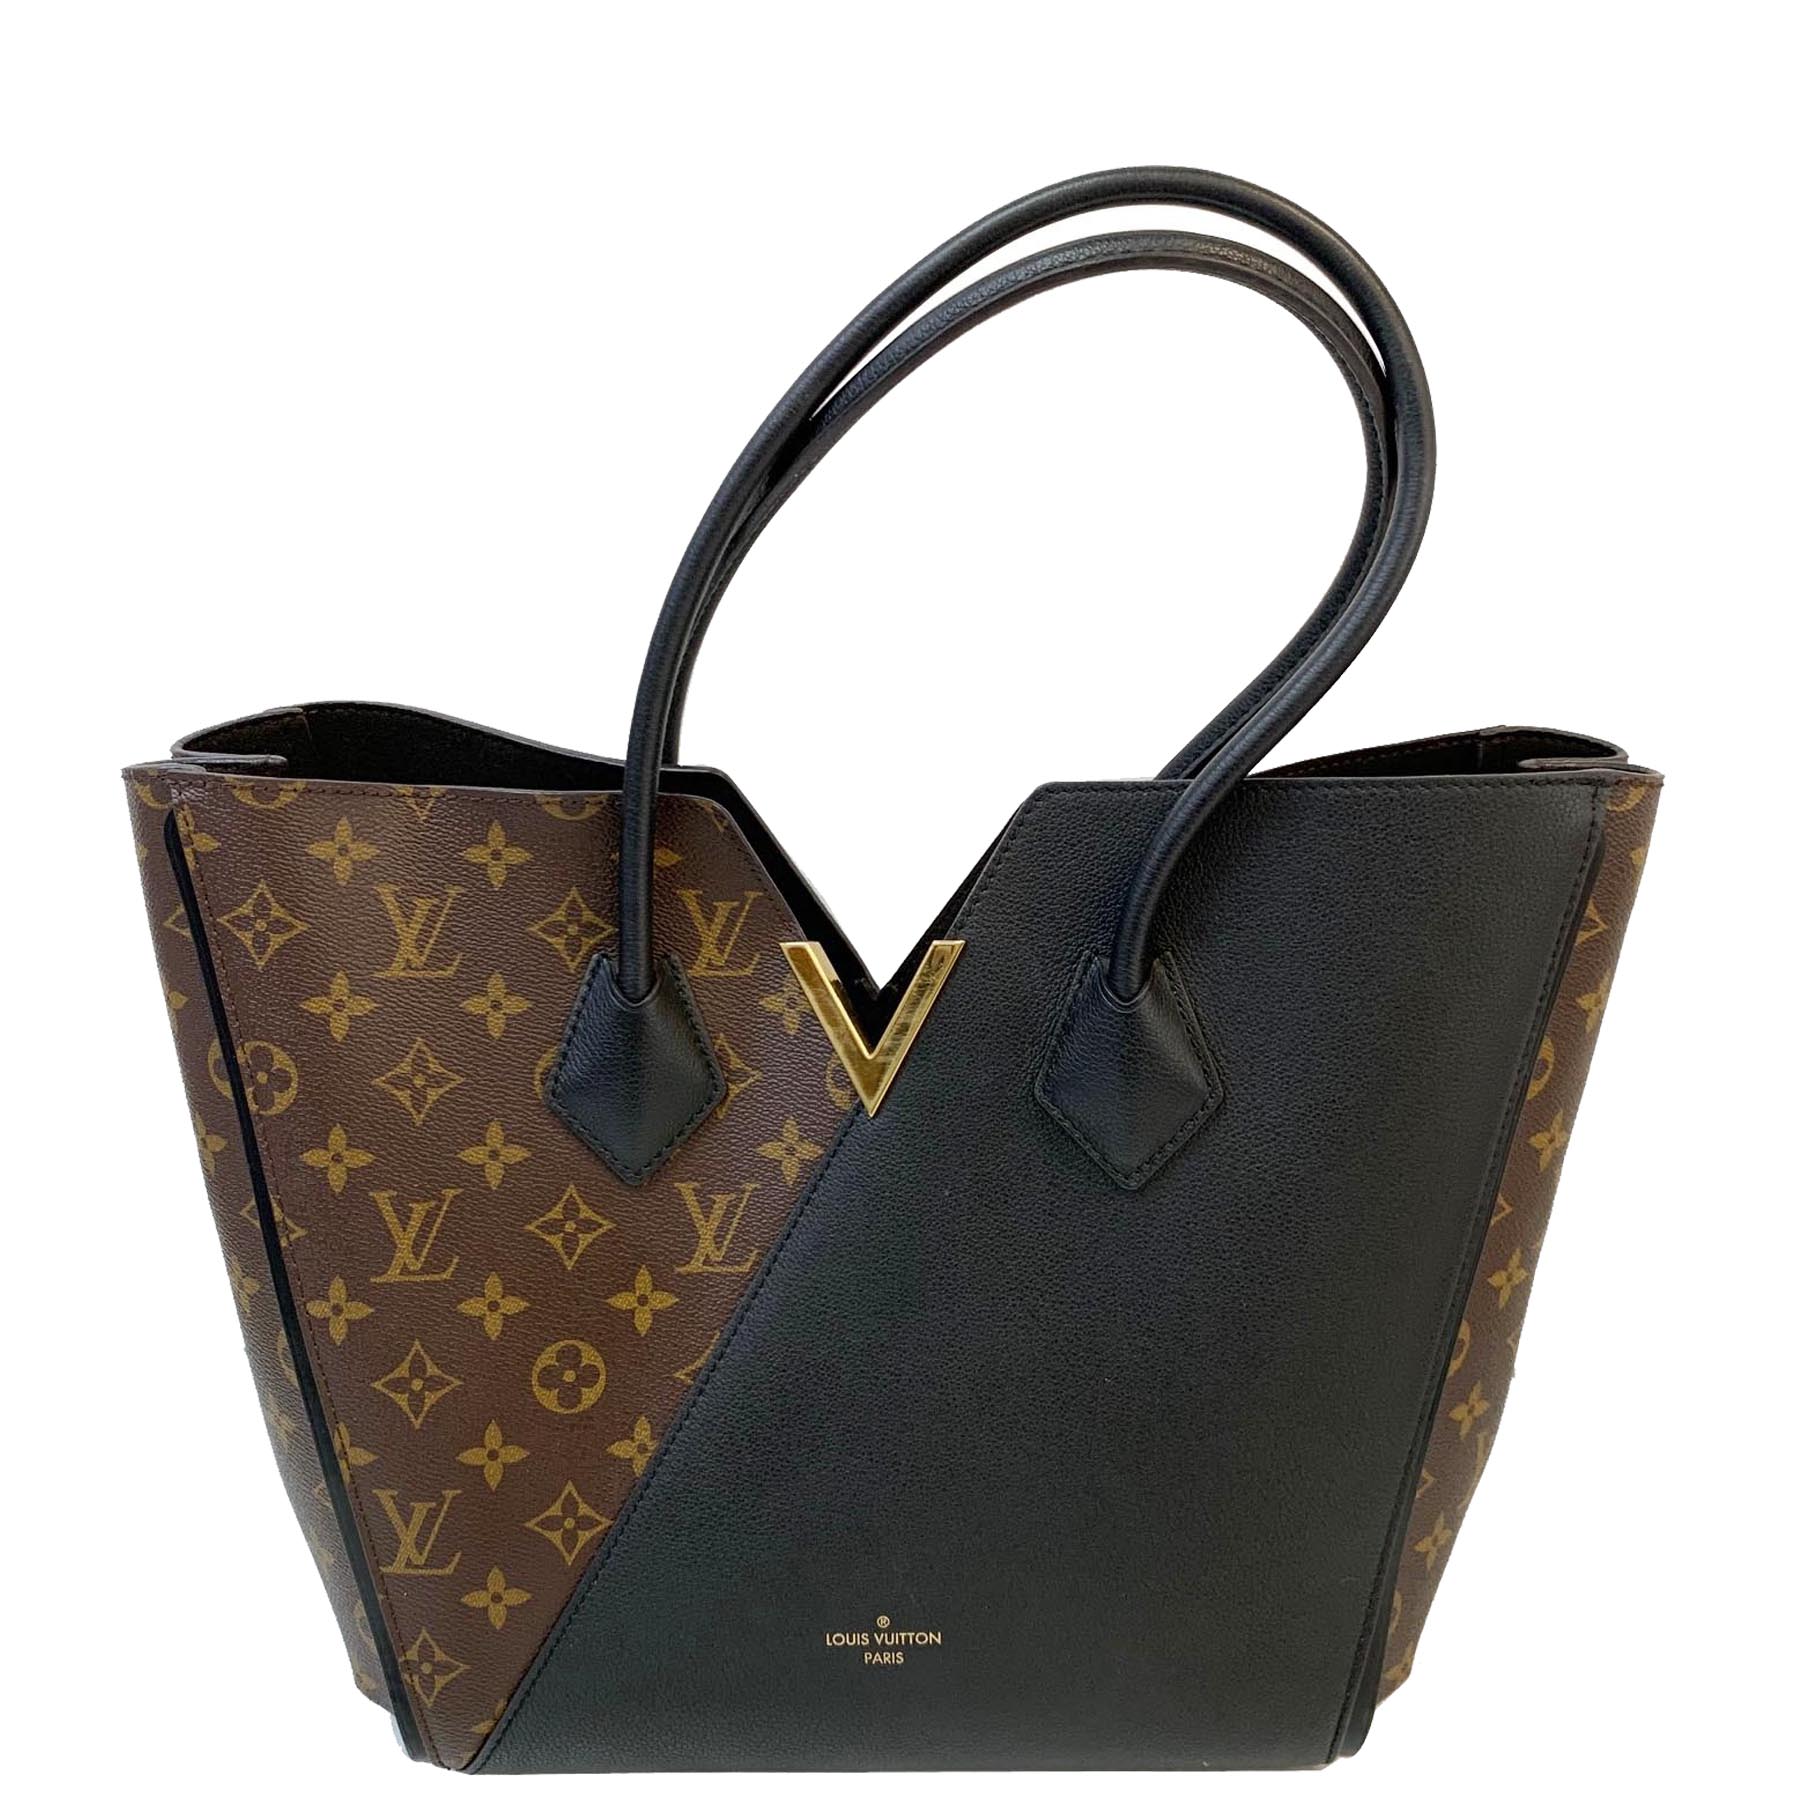 Túi Louis Vuitton LV Passy Monogram Bag Like Authentic   Shop giày  Swagger